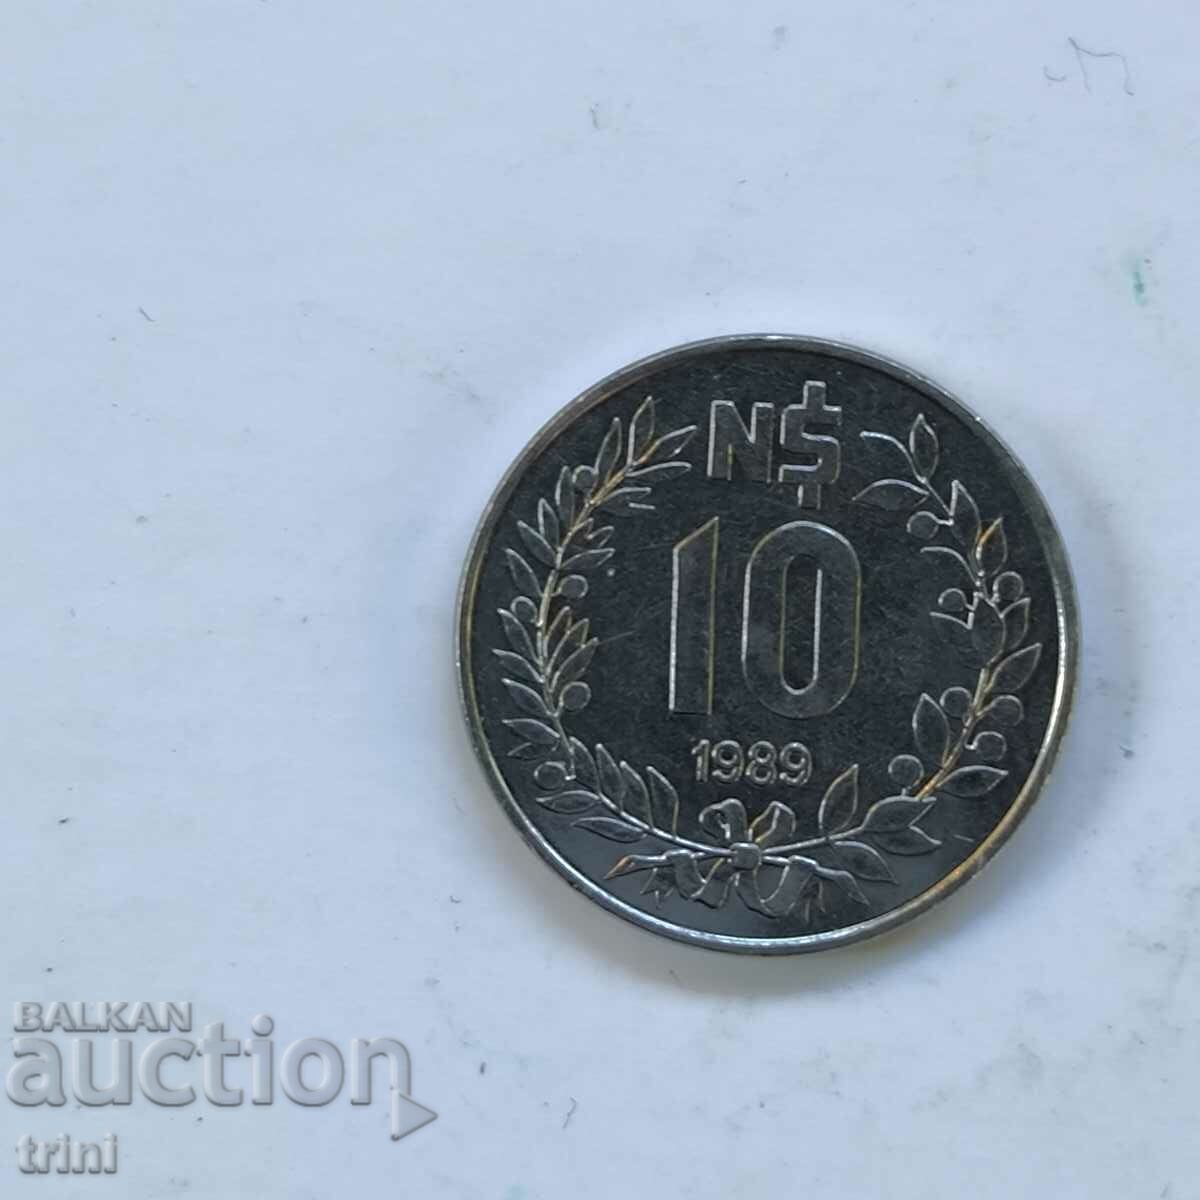 Uruguay 10 pesos 1989